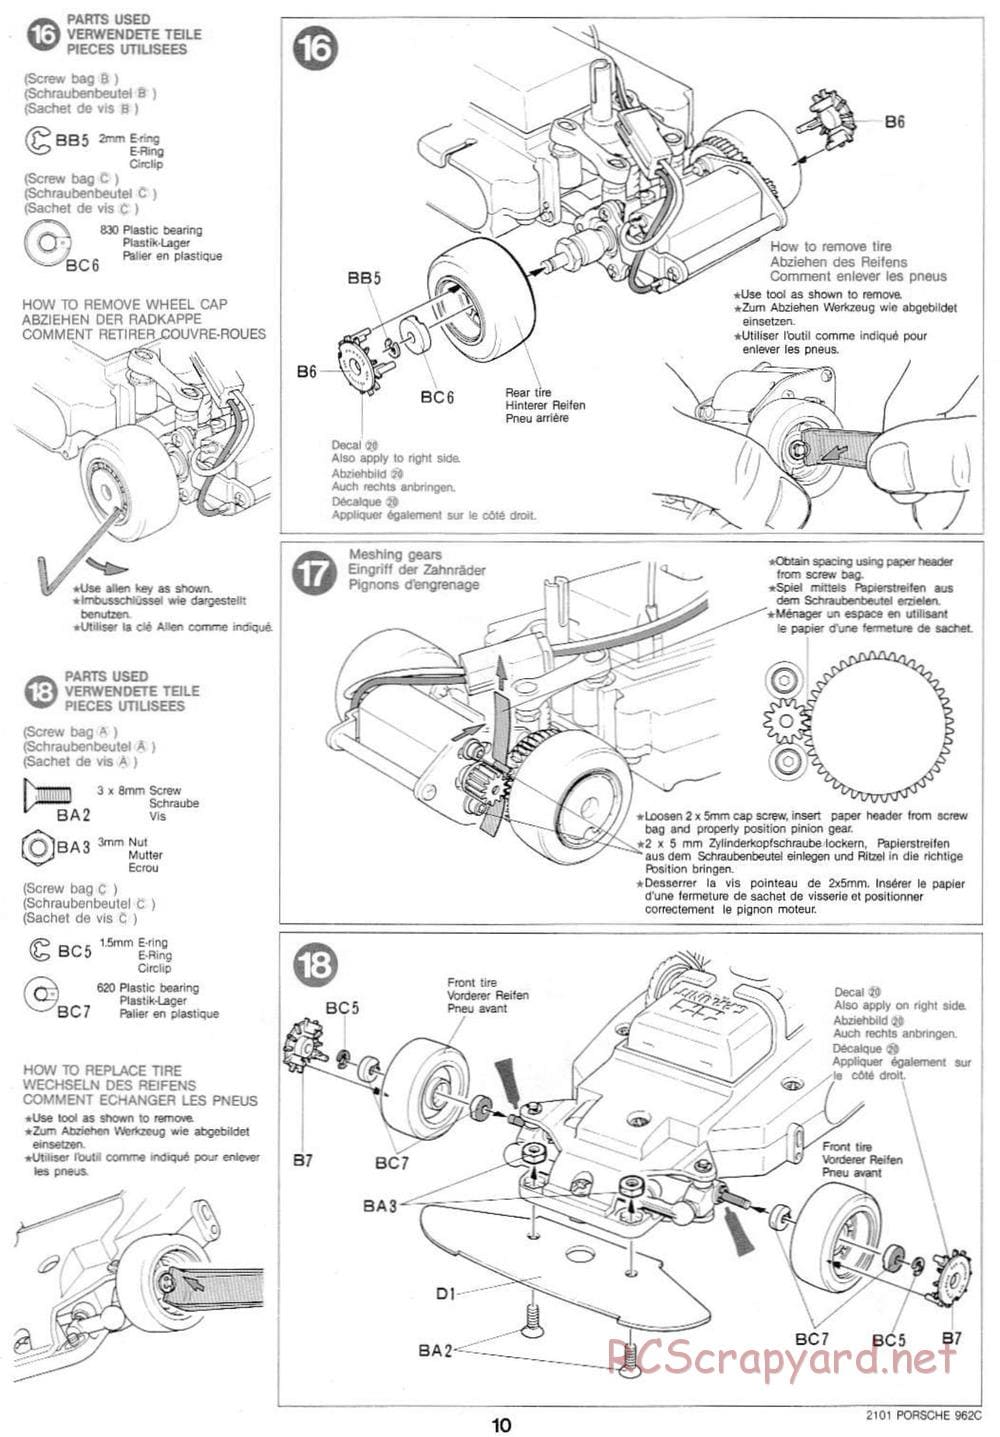 Tamiya - Tamtech - Porsche 962C Chassis - Manual - Page 10